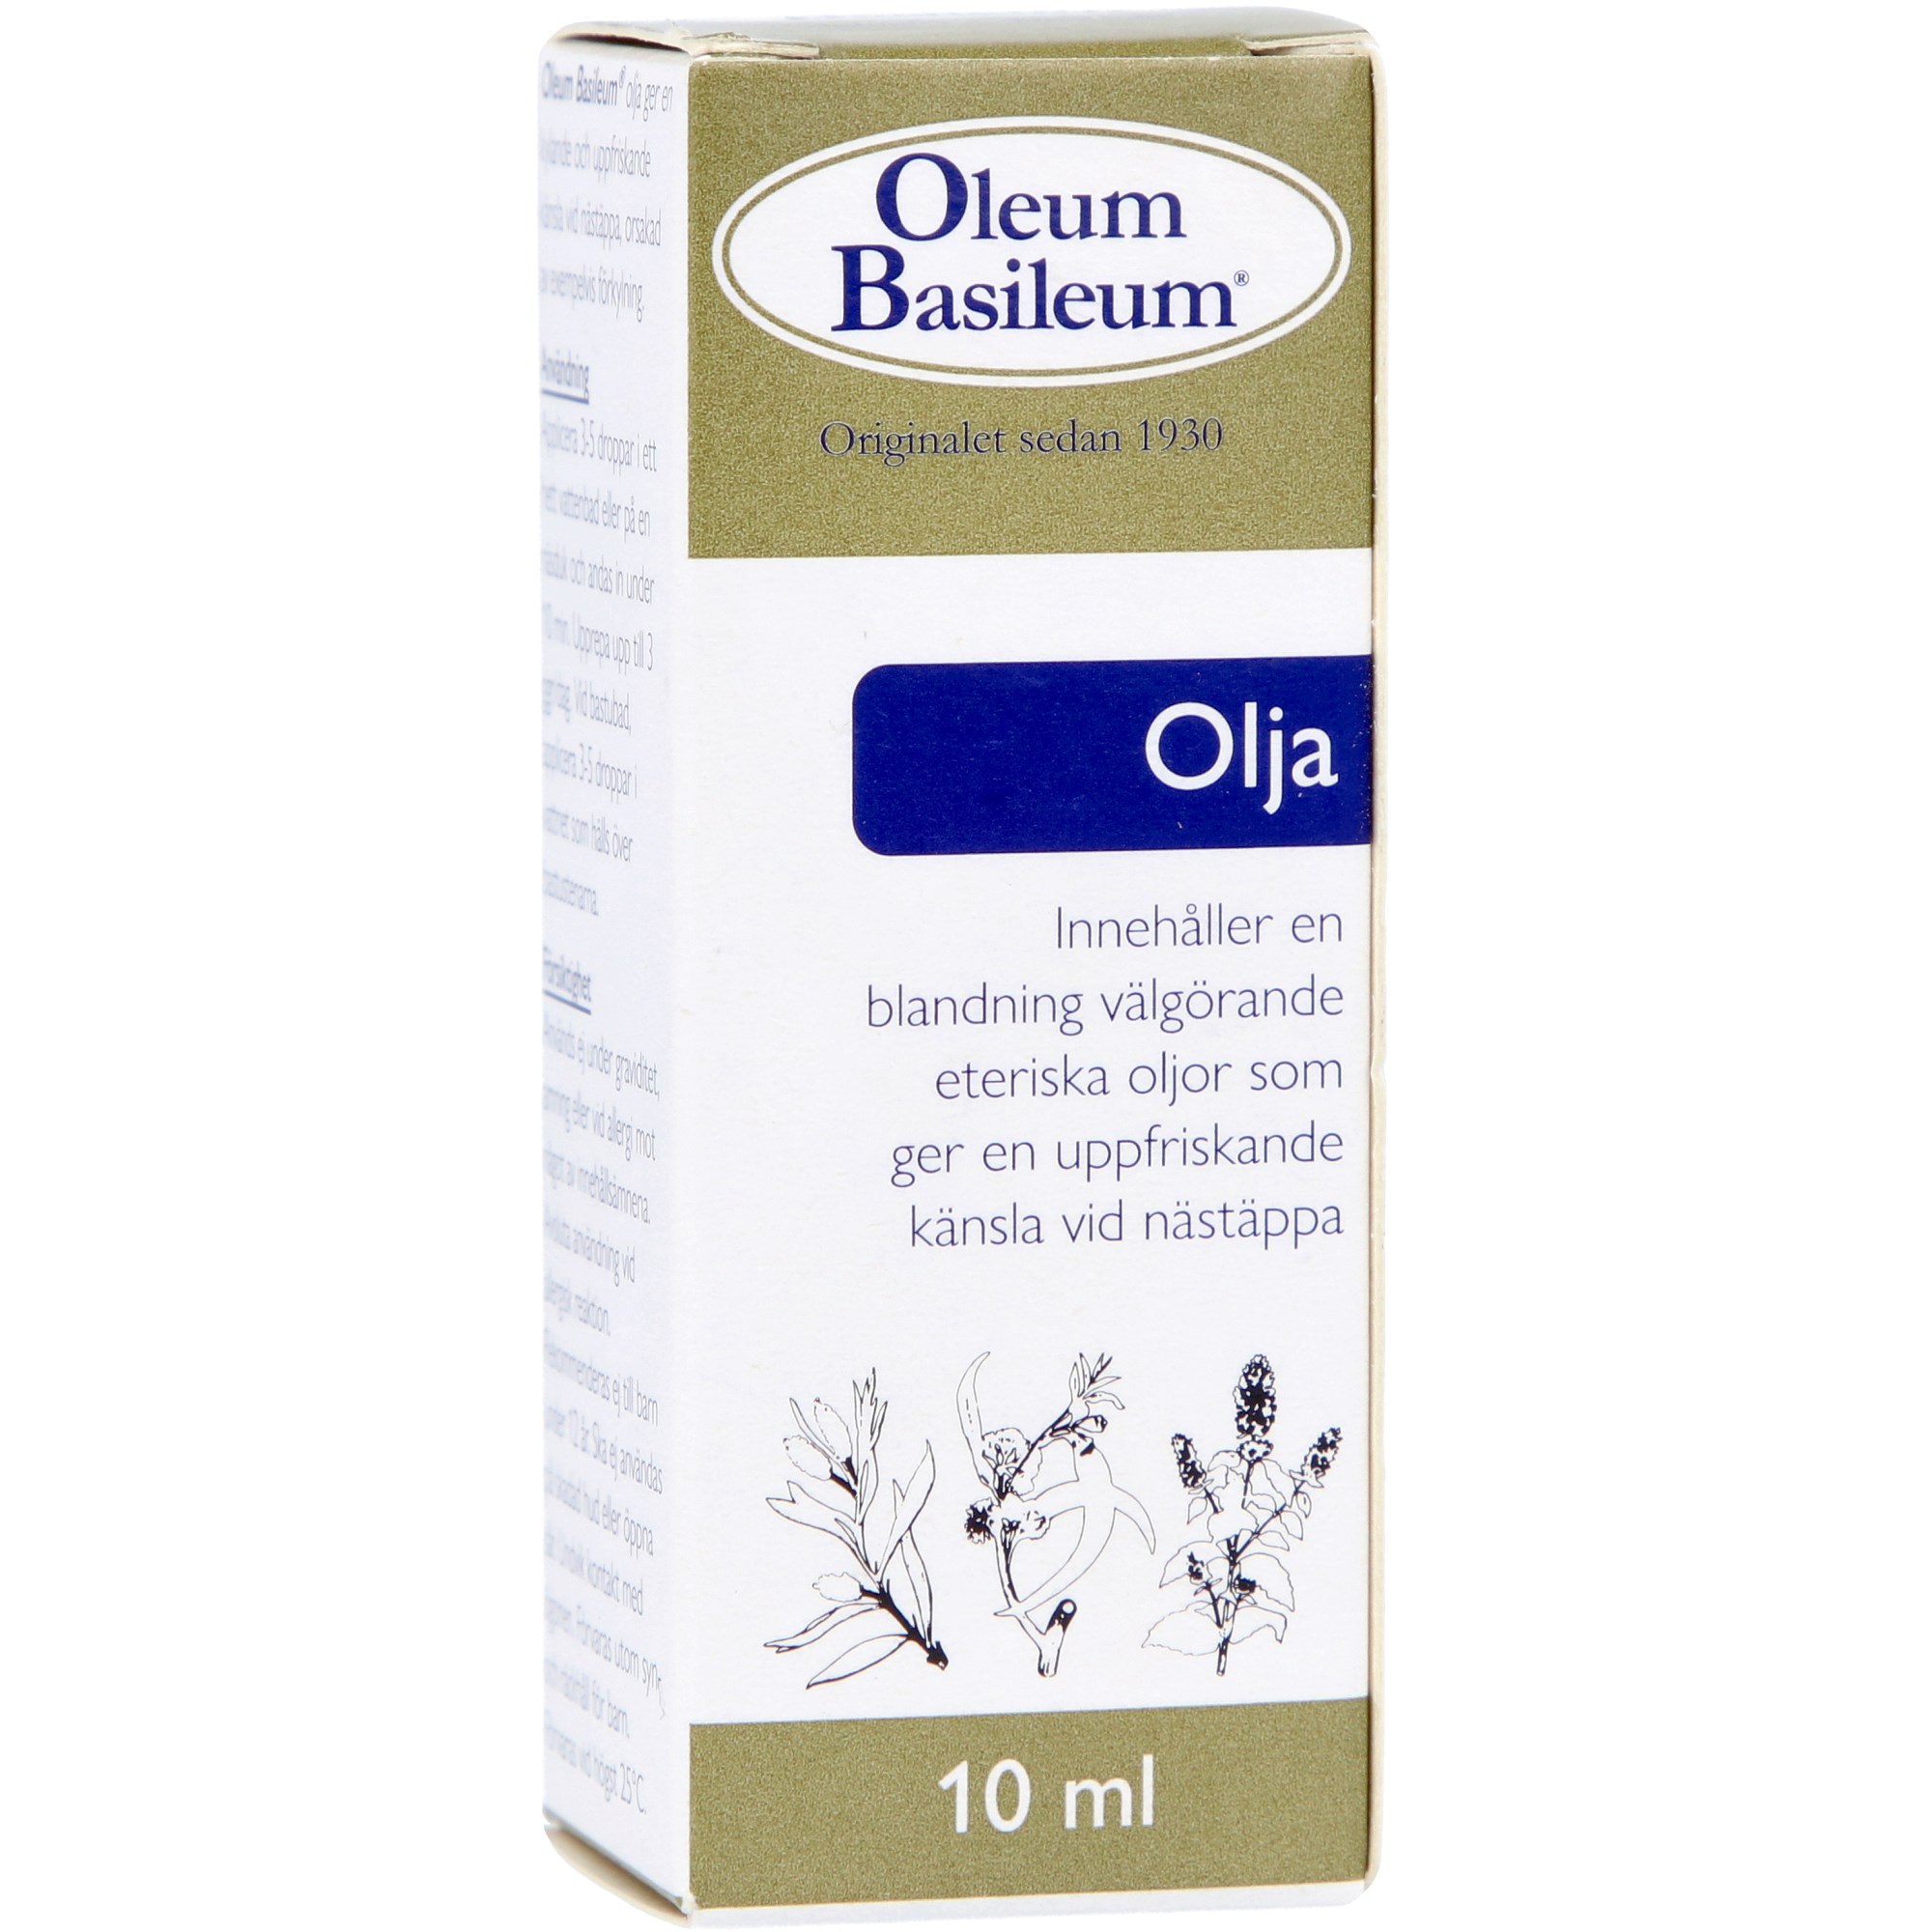 Oleum Basileum Basileum Olja 10 ml